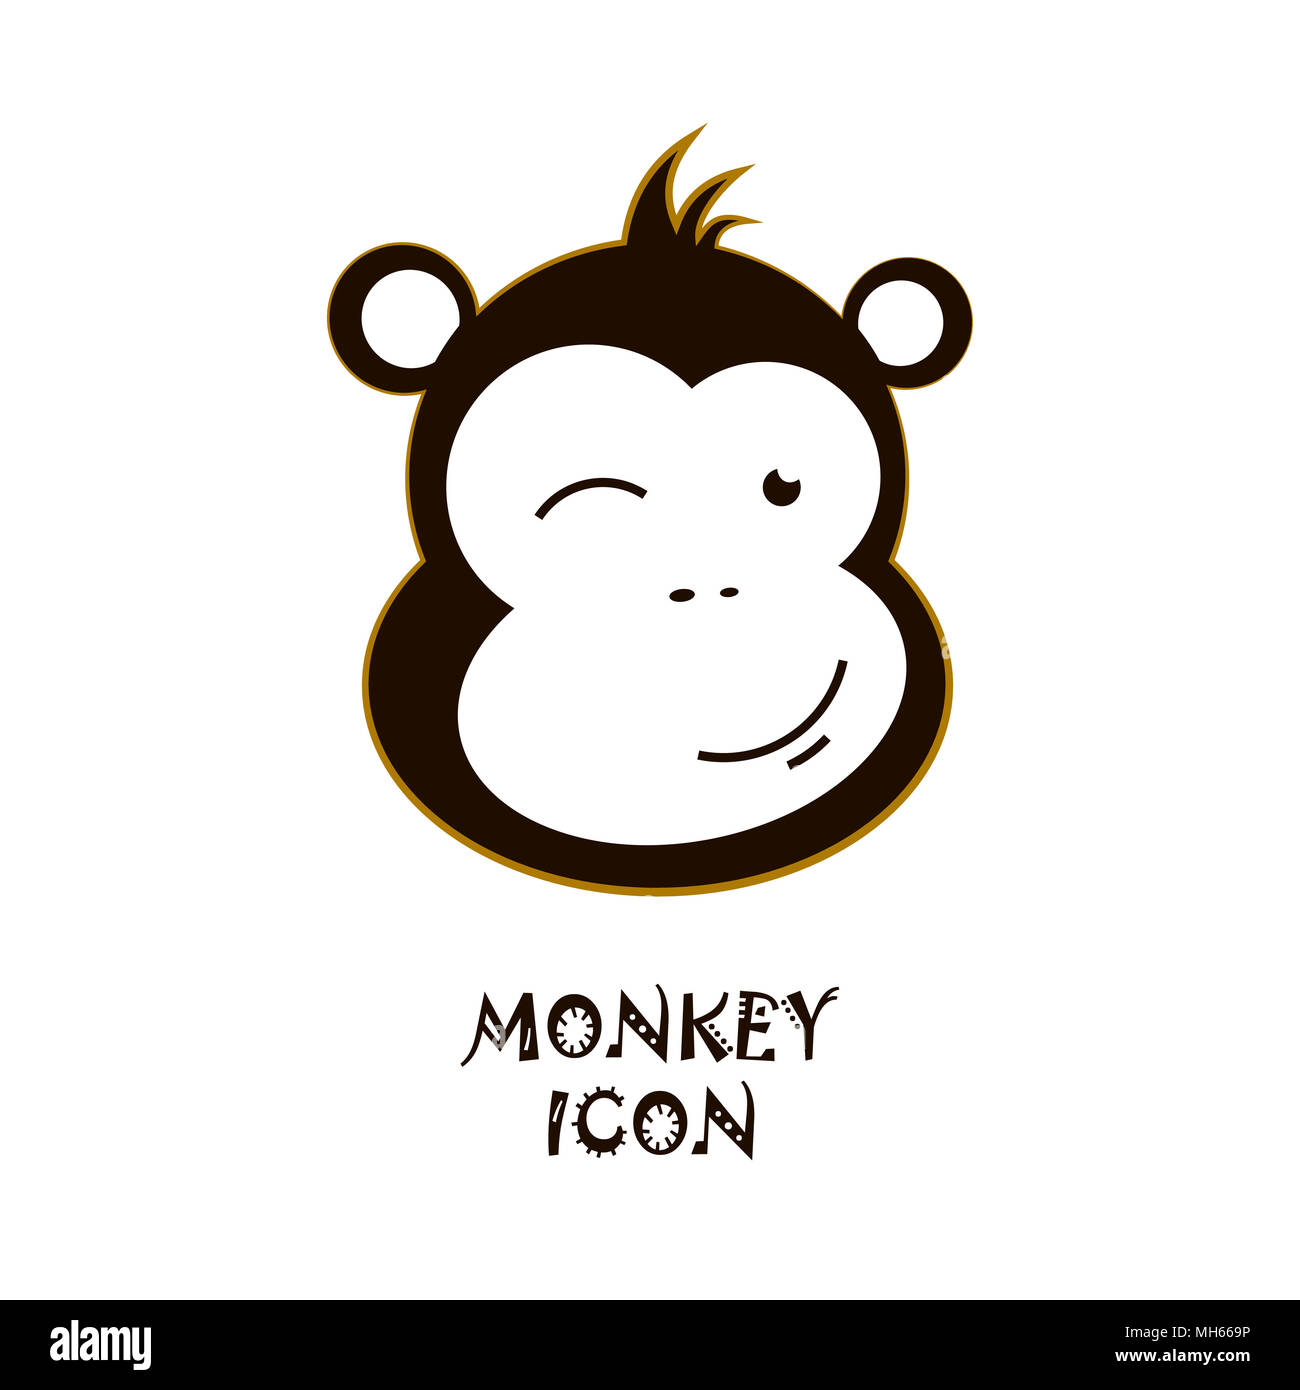 Winking monkey icon. Cute vector character illustration. Stock Photo